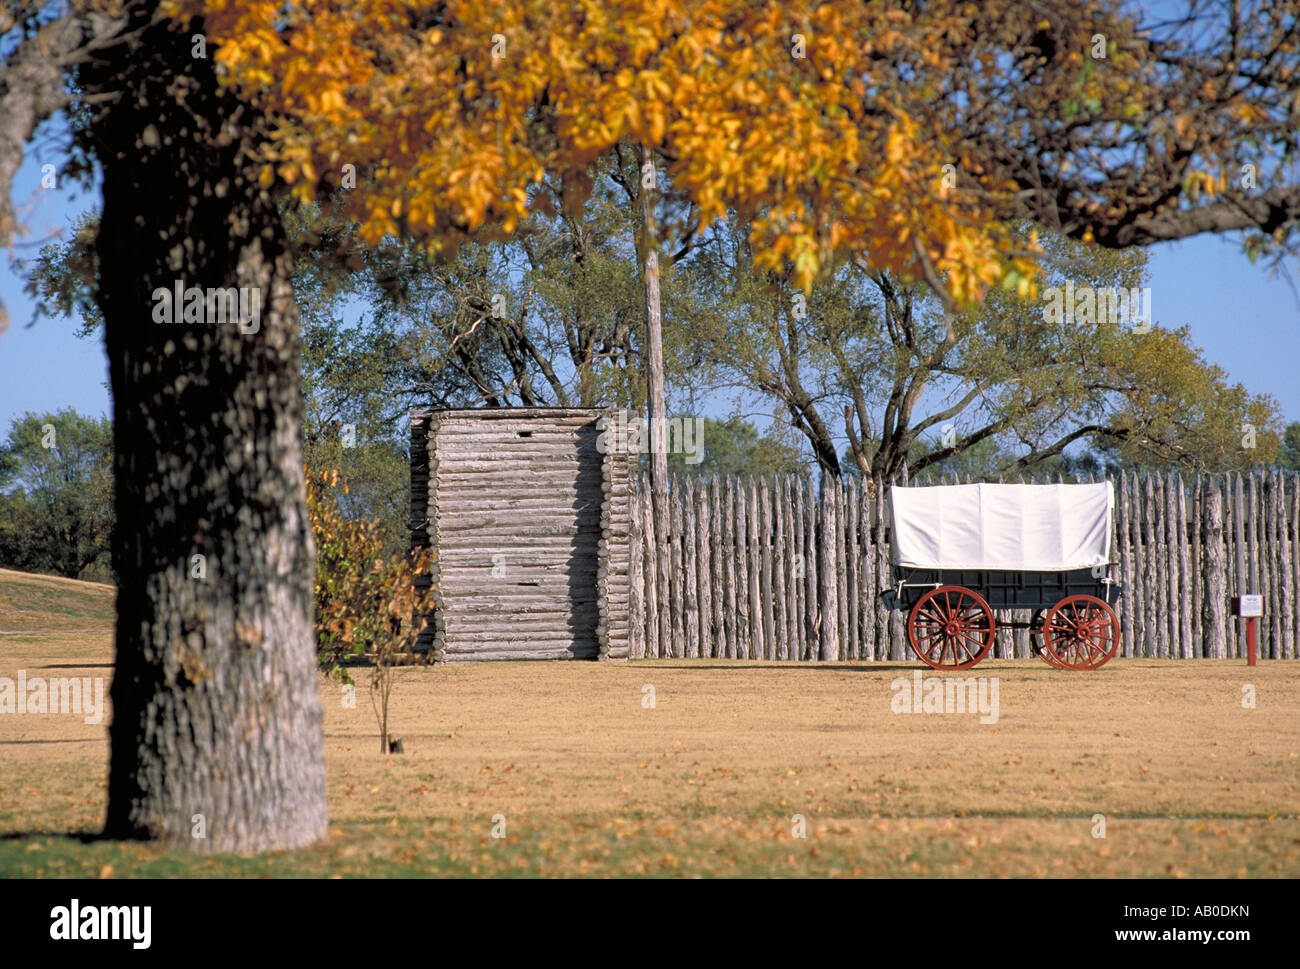 Elk279 2143 Oklahoma Fort Supply 1868 stockade replica with covered wagon Stock Photo